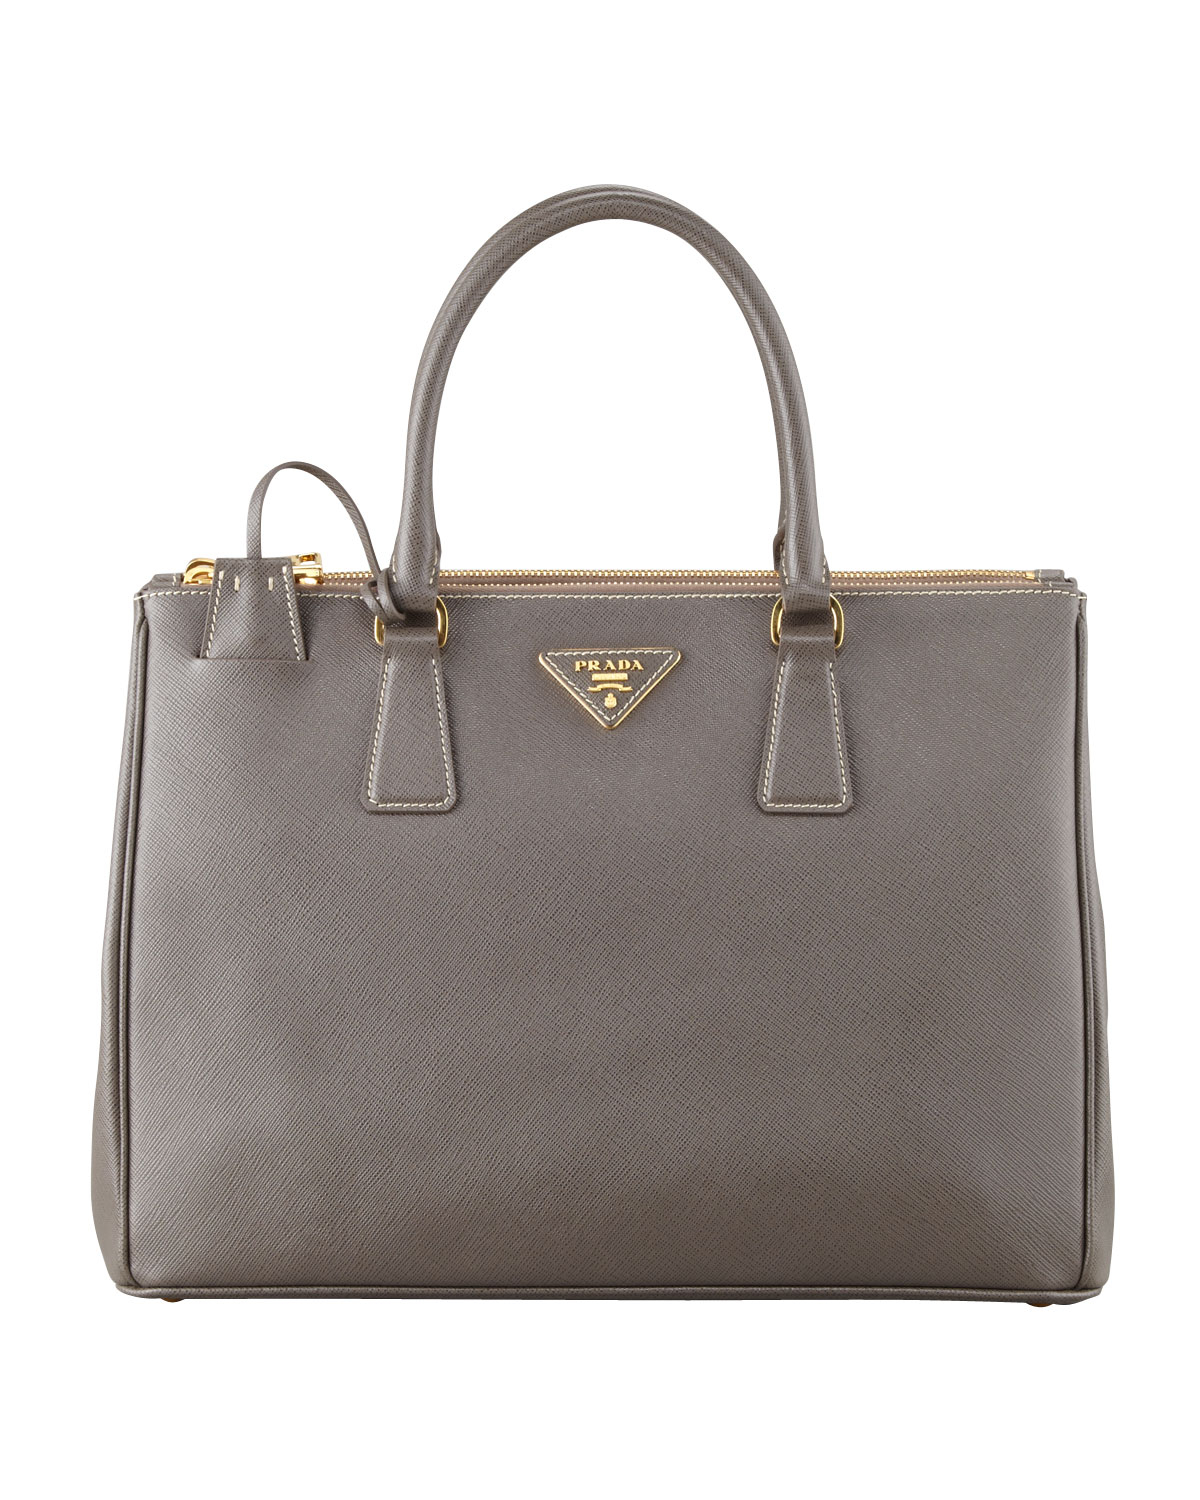 Prada Saffiano Double-Zip Executive Tote Bag in Gray | Lyst